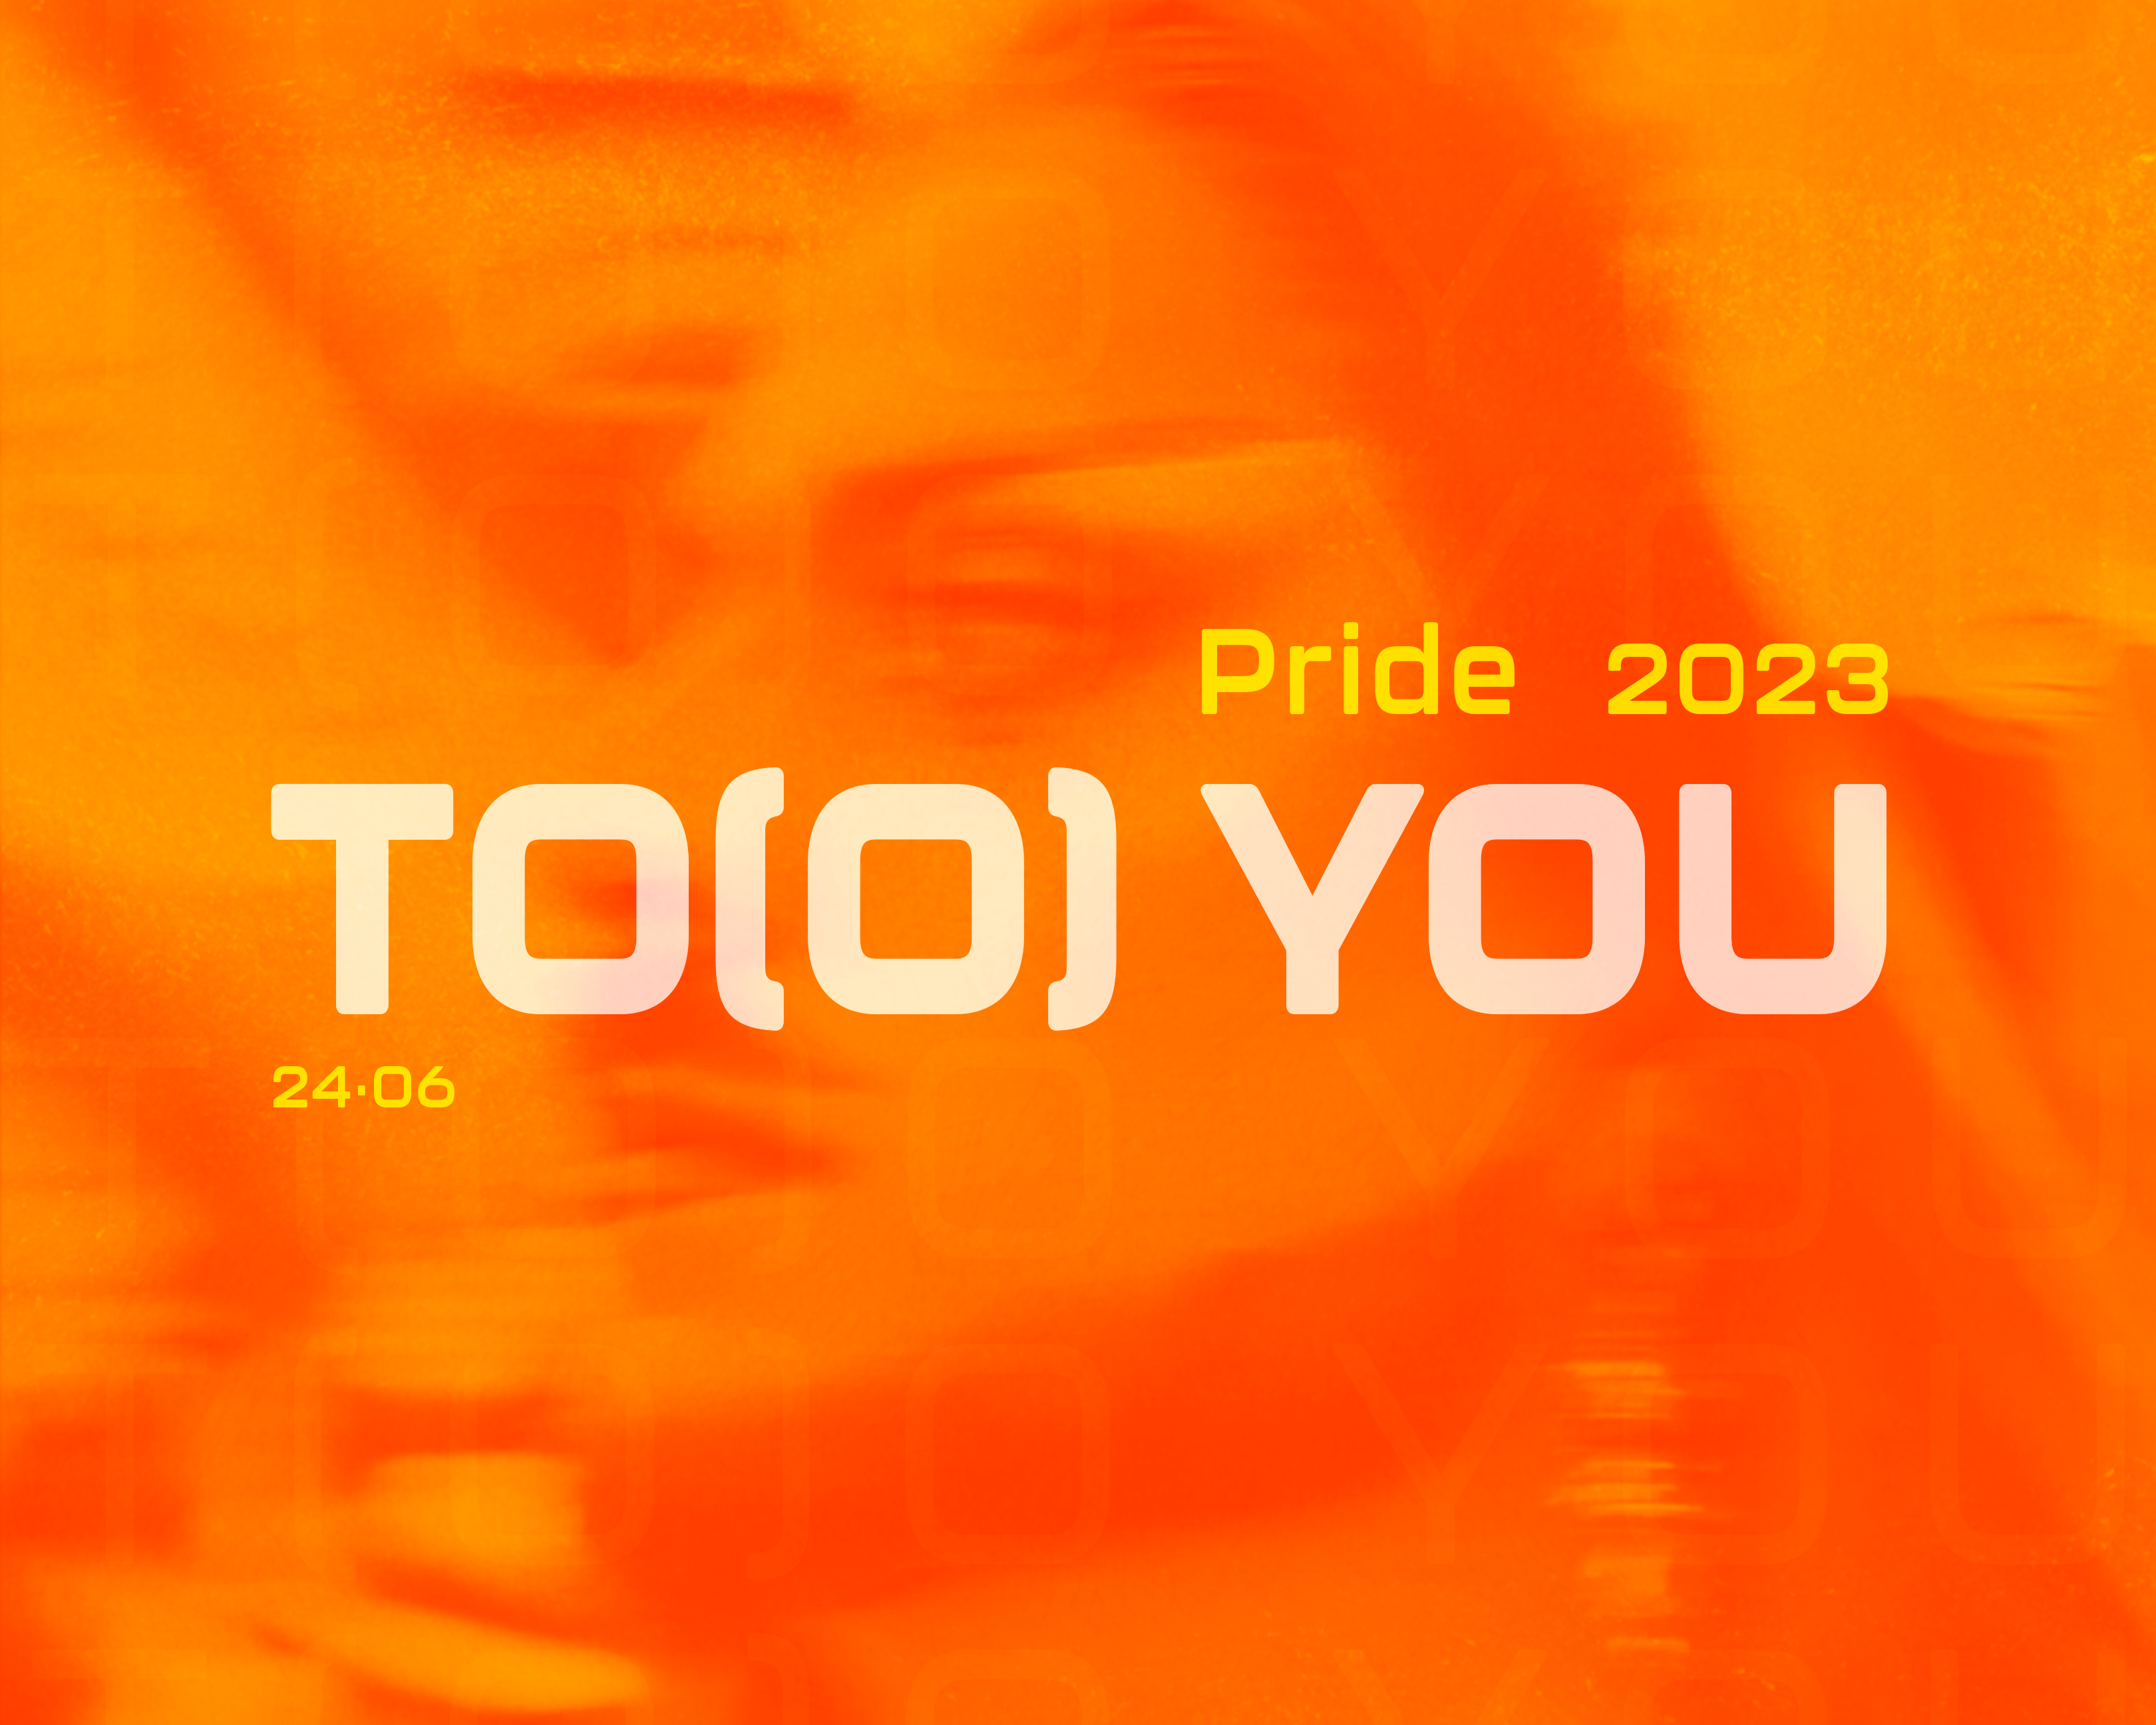 Pride 2023: We’re stories not stereotypes